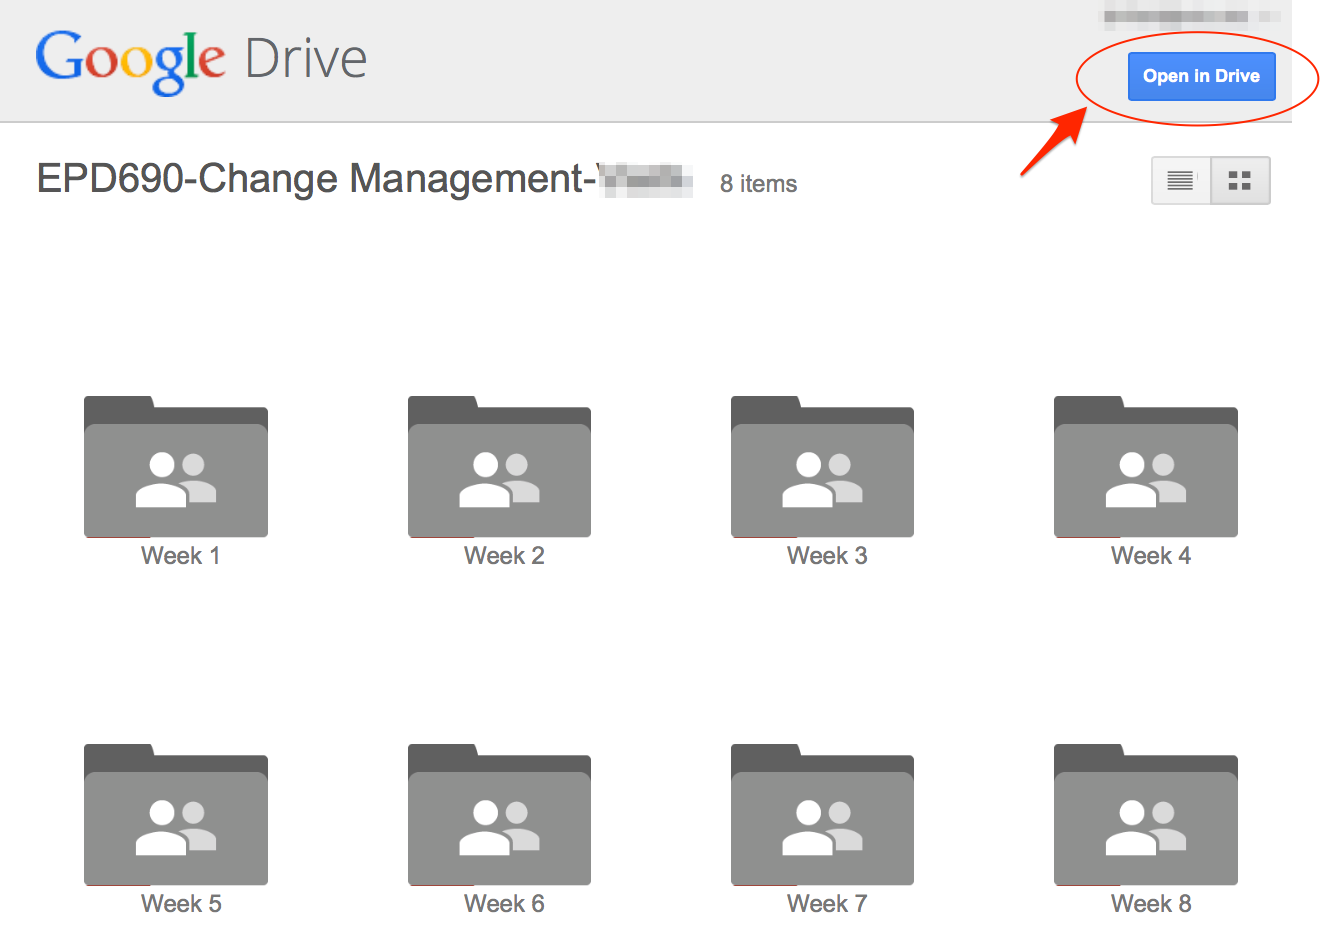 Google Drive folder showing Open In Drive button